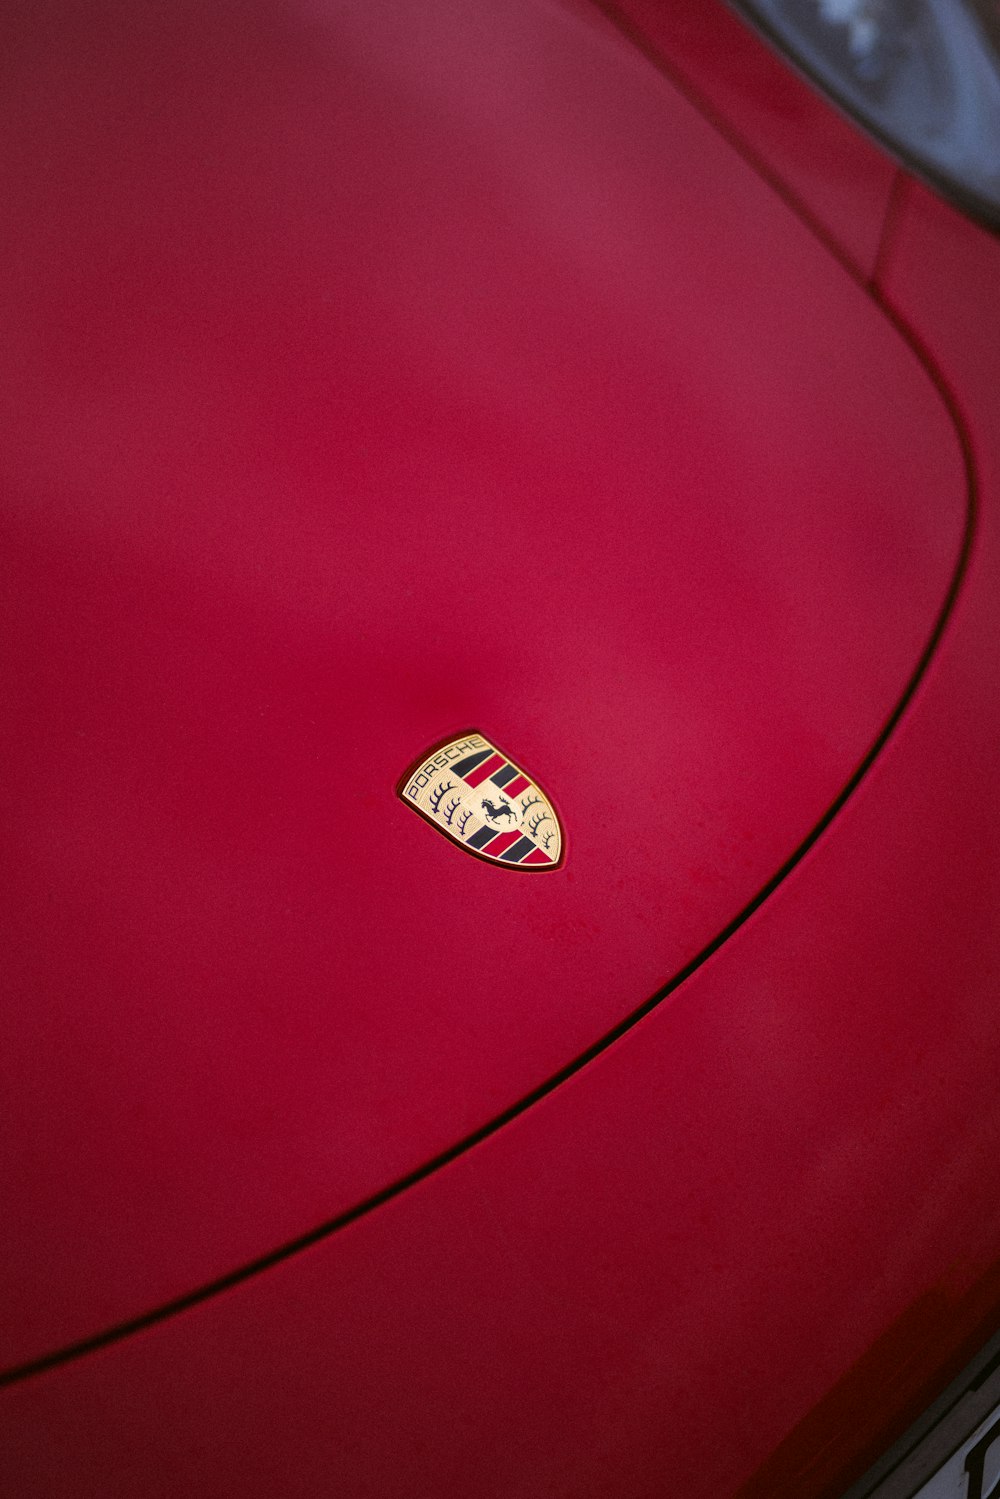 red Porsche Carrera